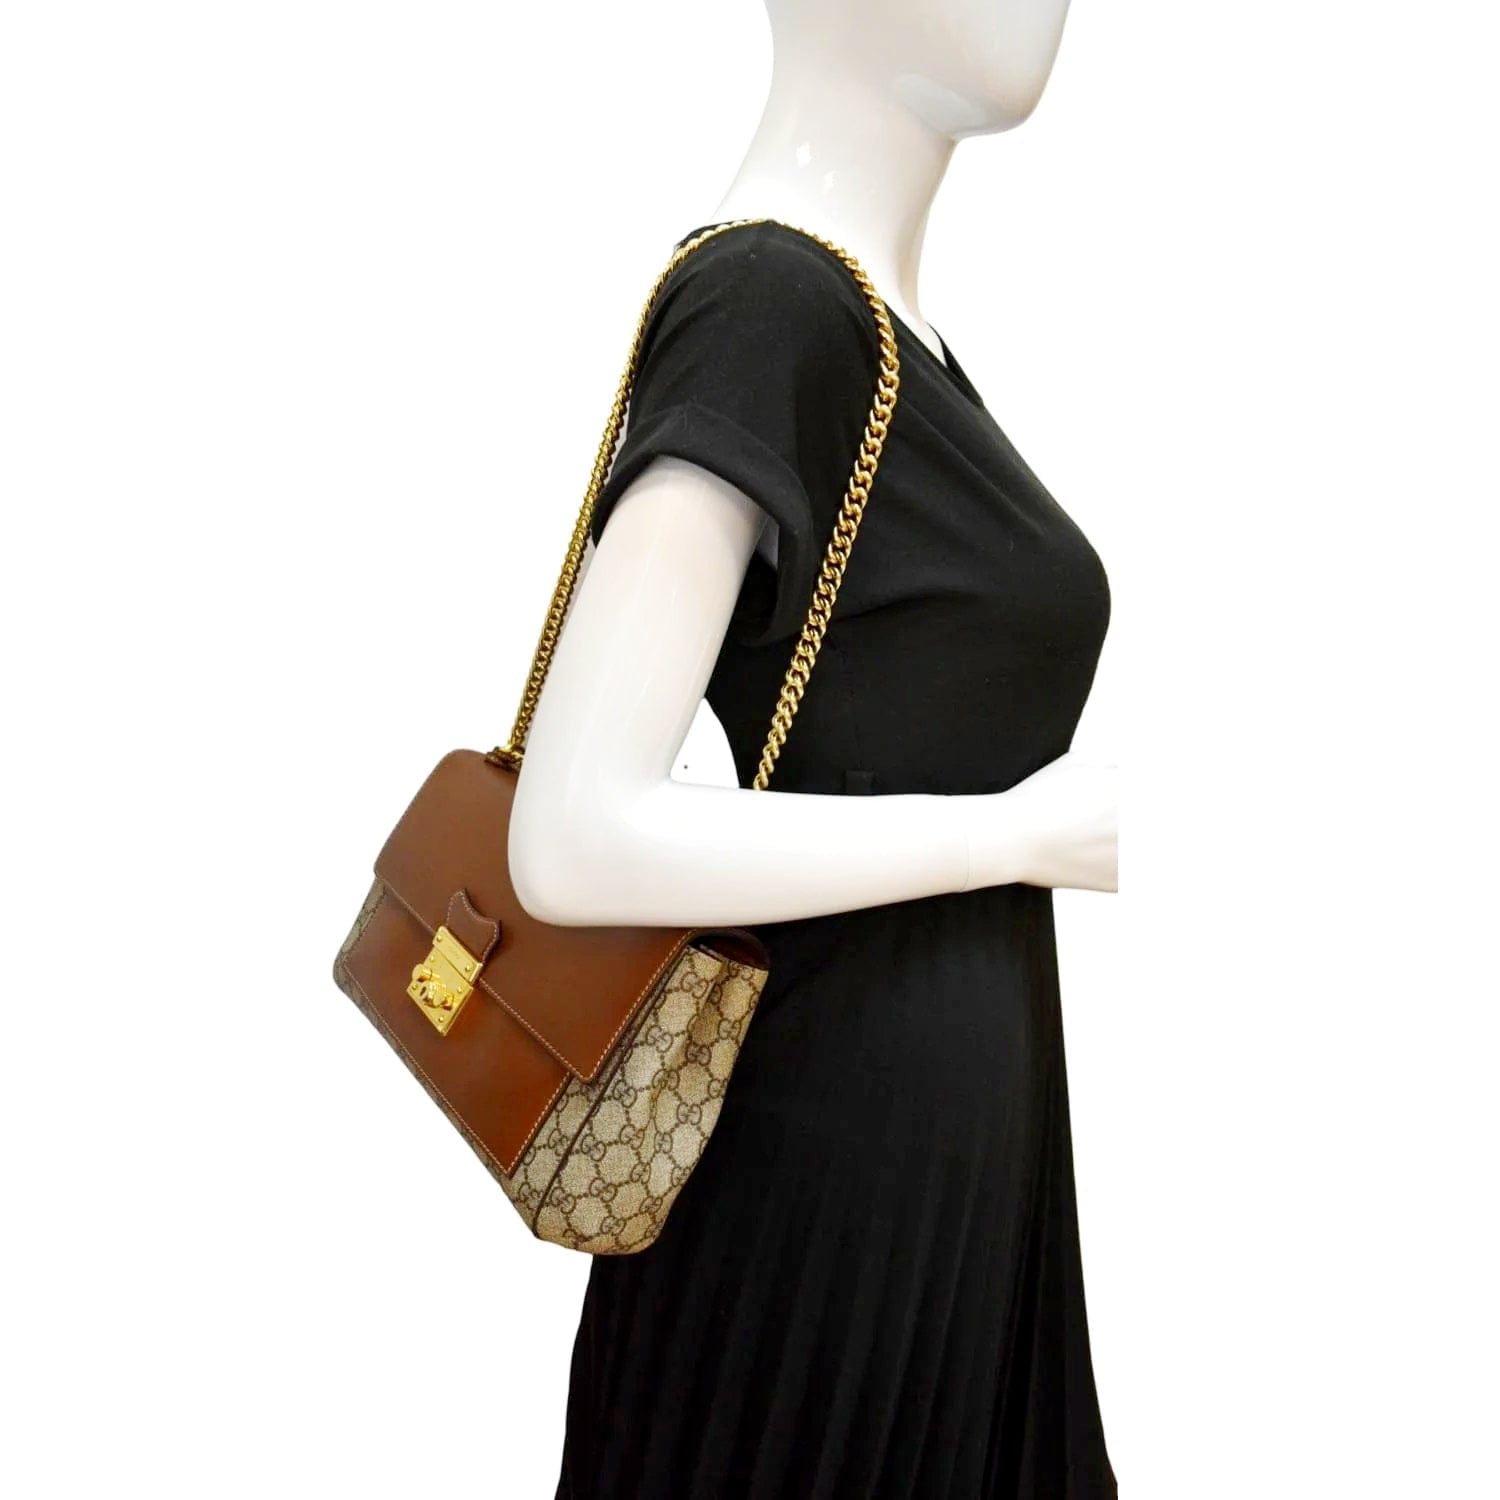 Gucci Padlock Medium Embossed Leather Shoulder Bag In Black, ModeSens